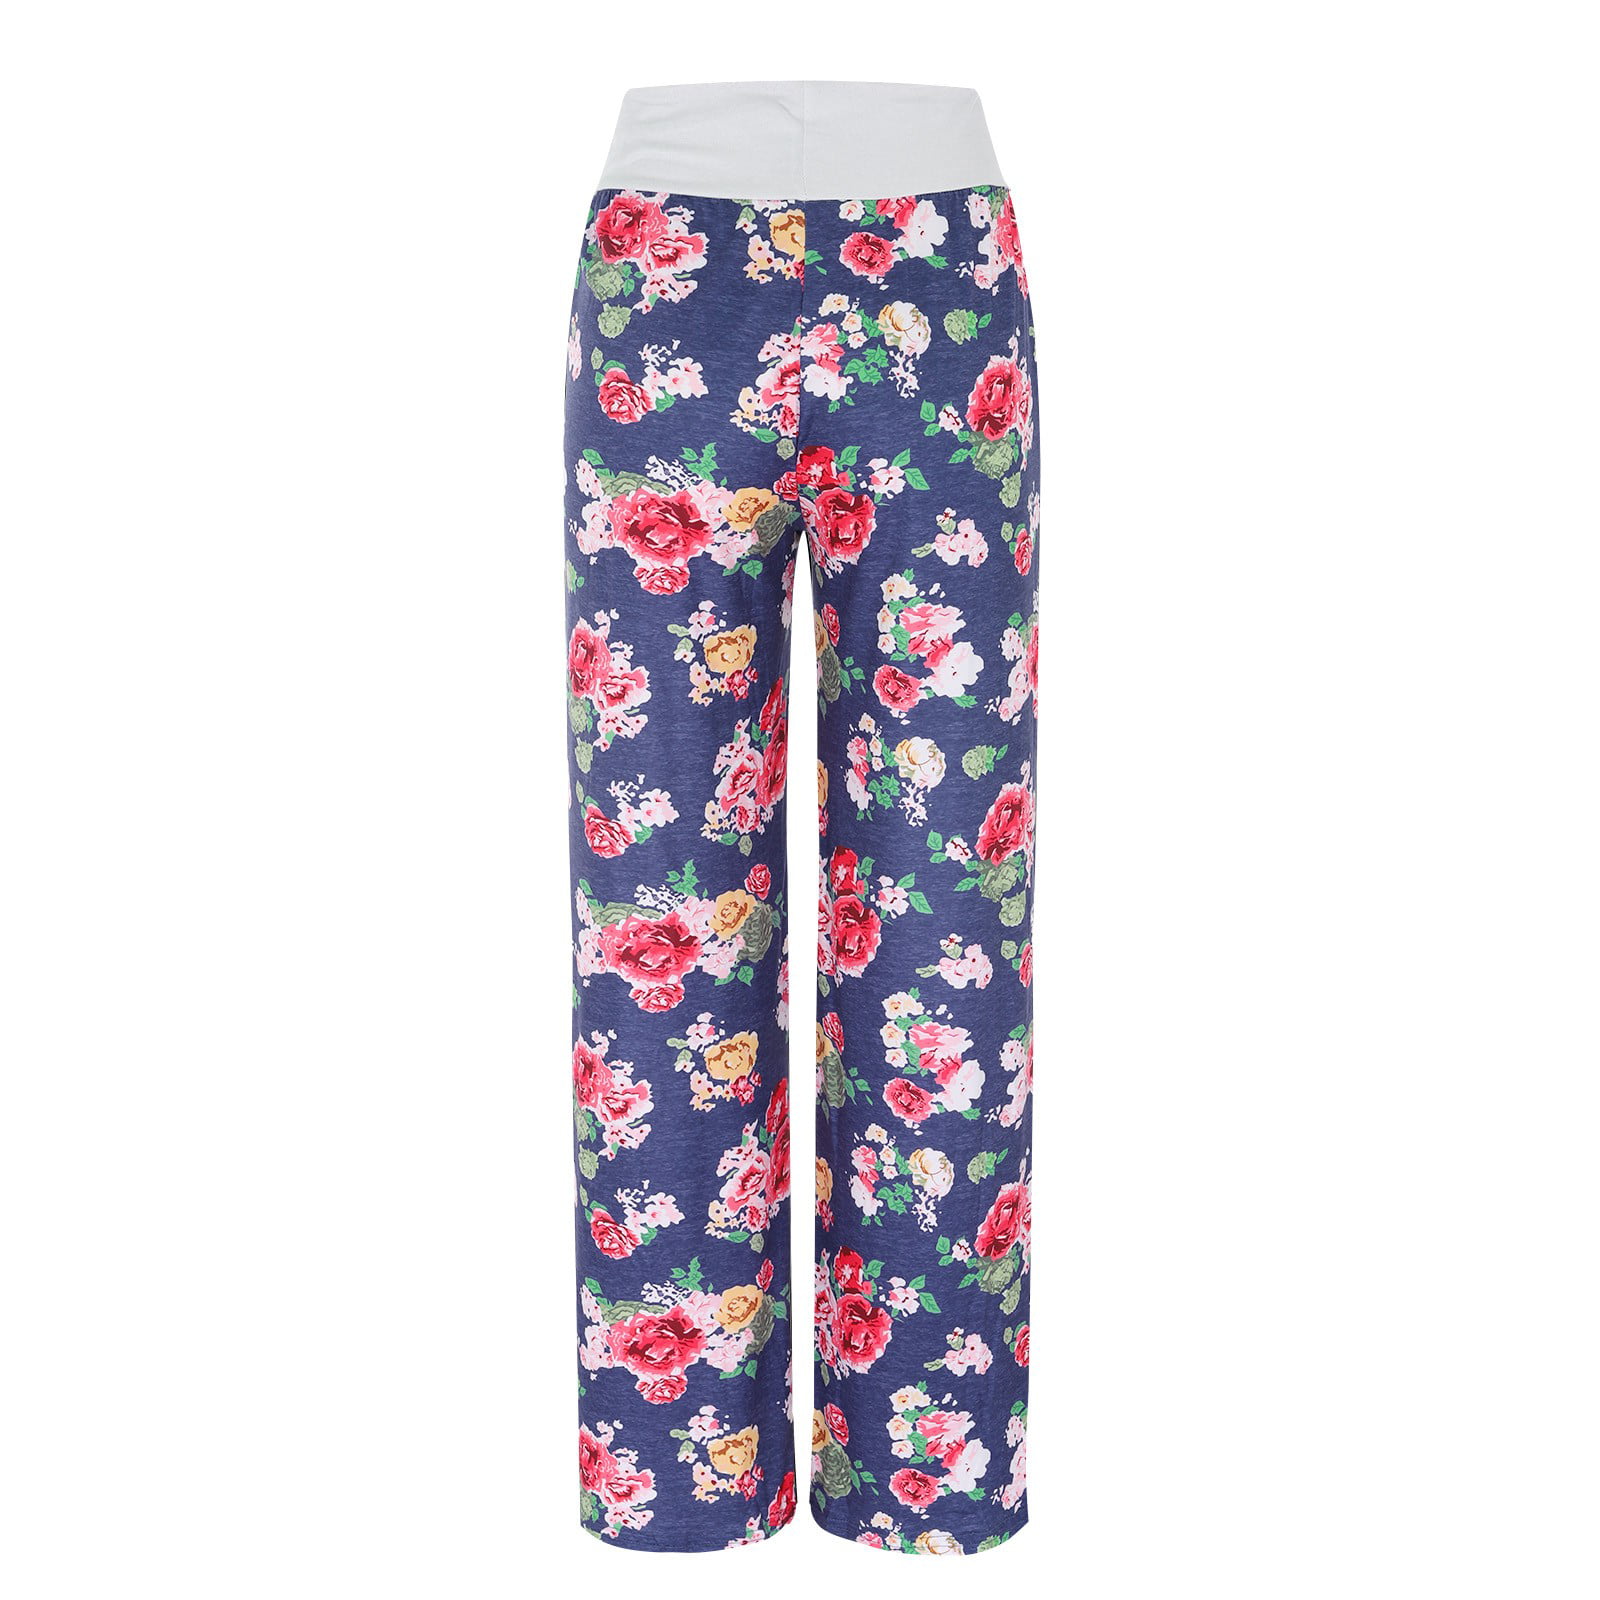 WUAI-Women Comfy Casual Pajama Pants High Waist Stretch Floral Print Drawstring Palazzo Lounge Pants Wide Leg 